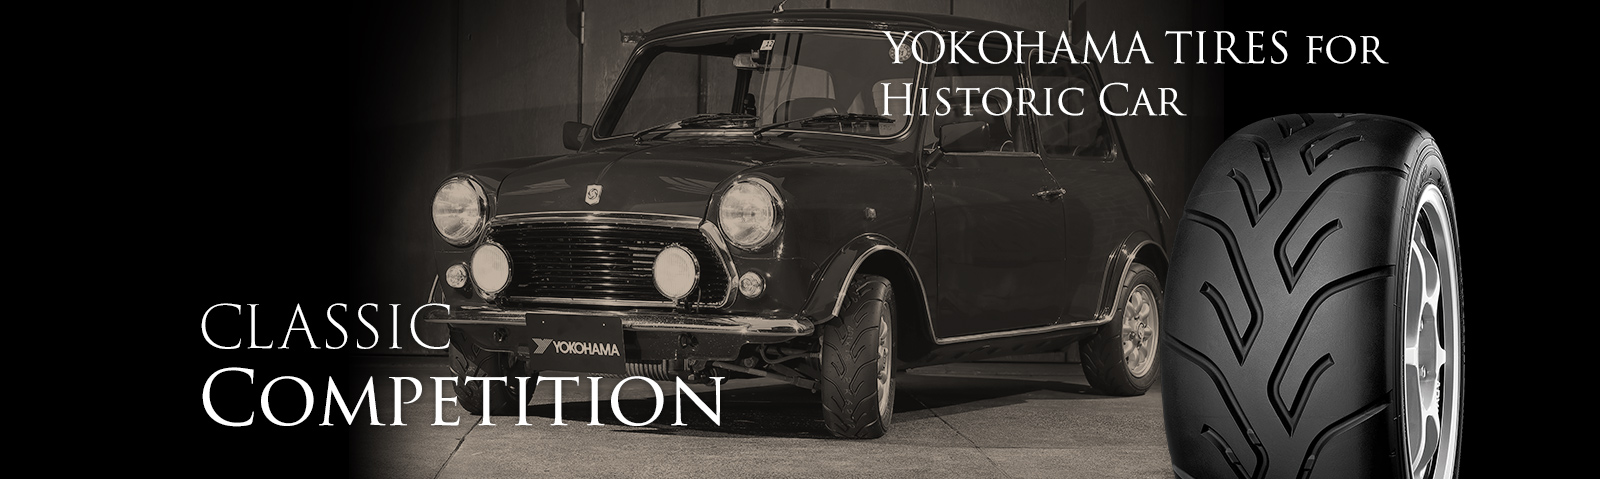 YOKOHAMA TIRES FOR HISTORIC CAR | 横浜ゴム - ヨコハマタイヤ 